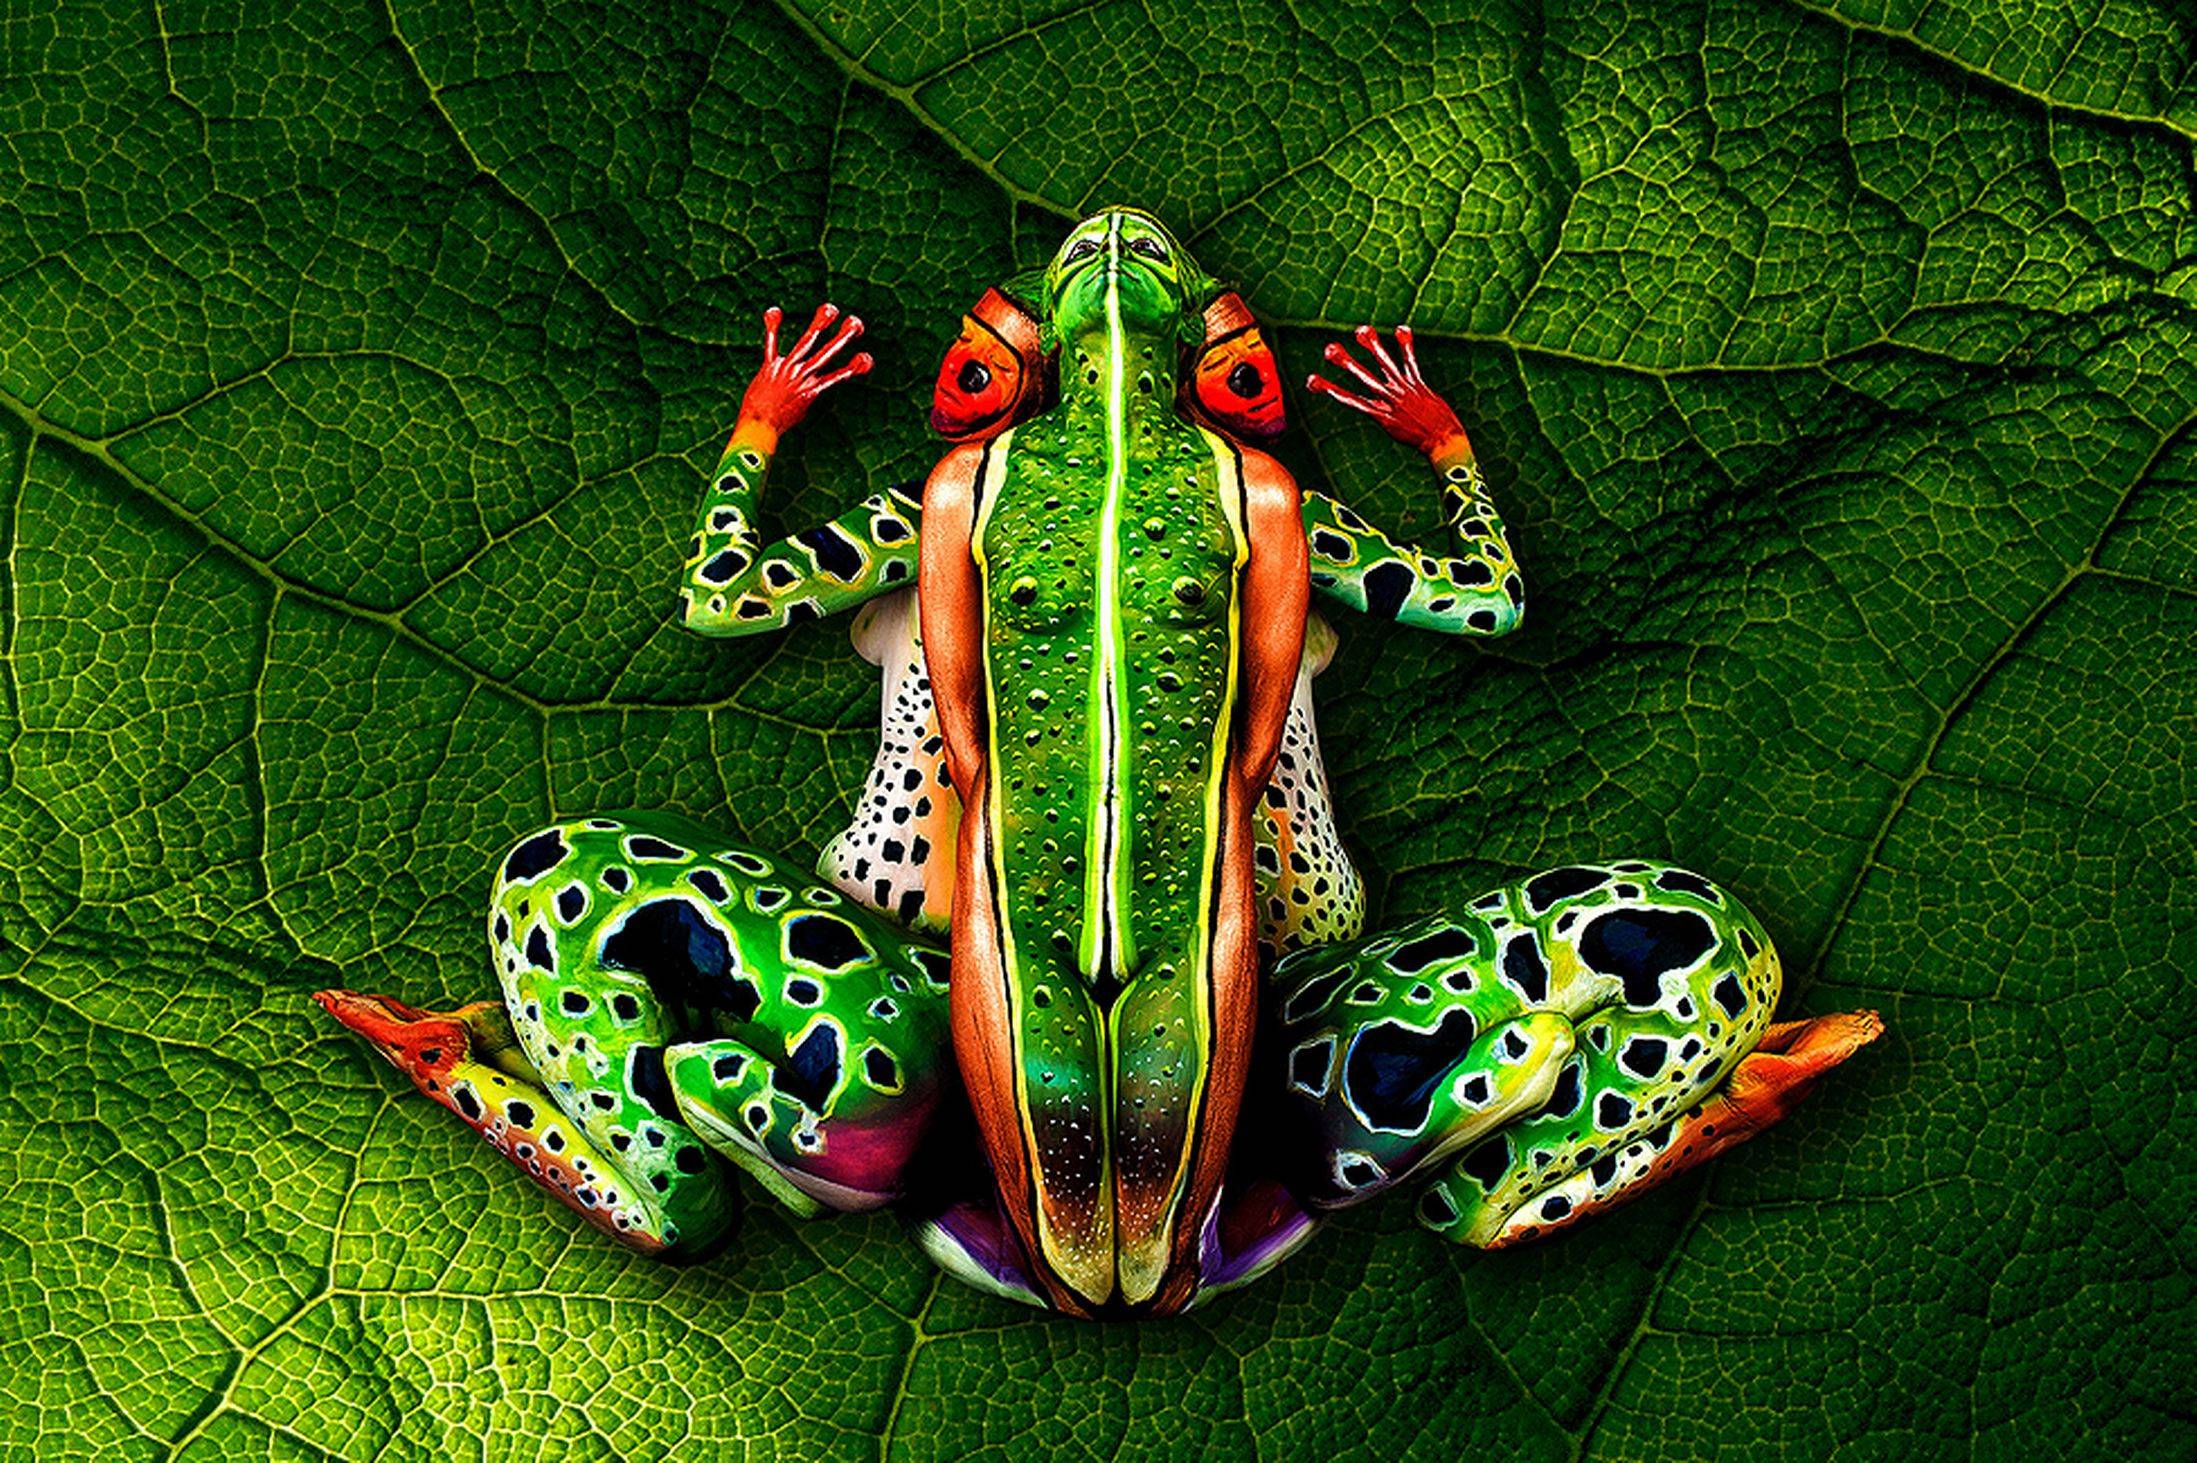 “The Frog”, A Bodypainting Masterpiece by Johannes Stötter